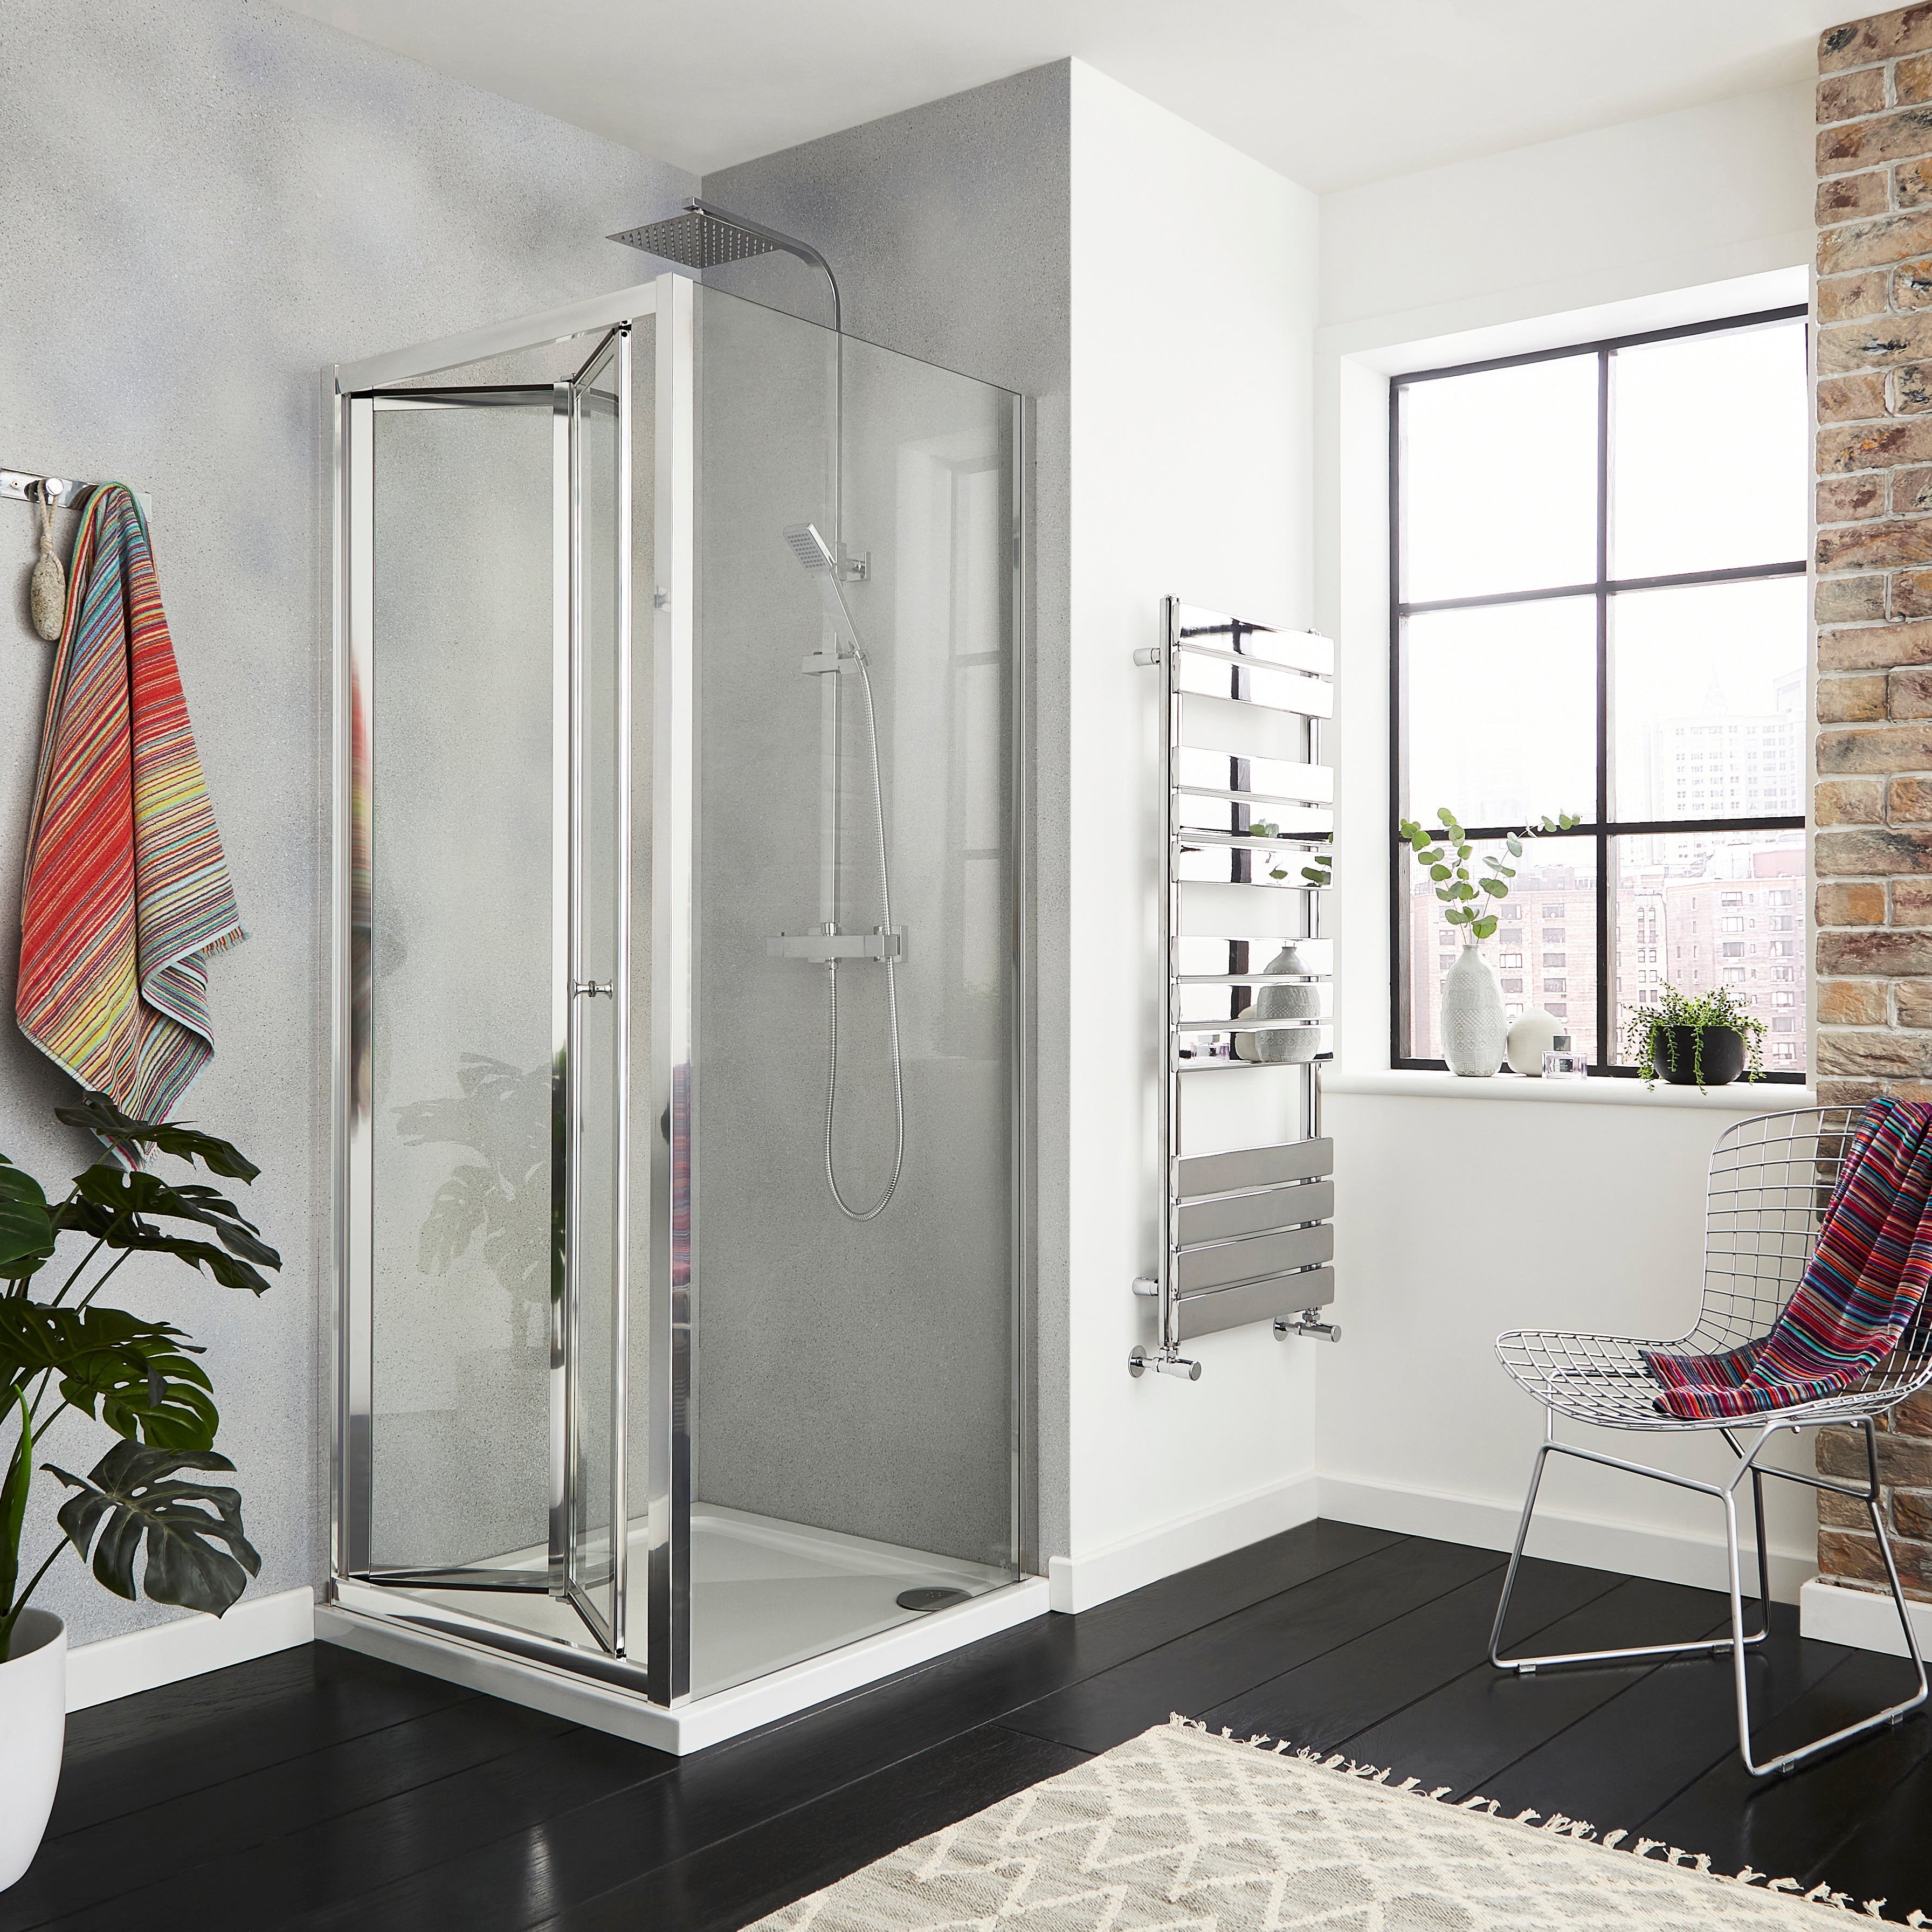 Upgrade Your Bathroom with Stylish Shower Enclosure Doors: KV6 Bi-Fold & Sliding Door Options